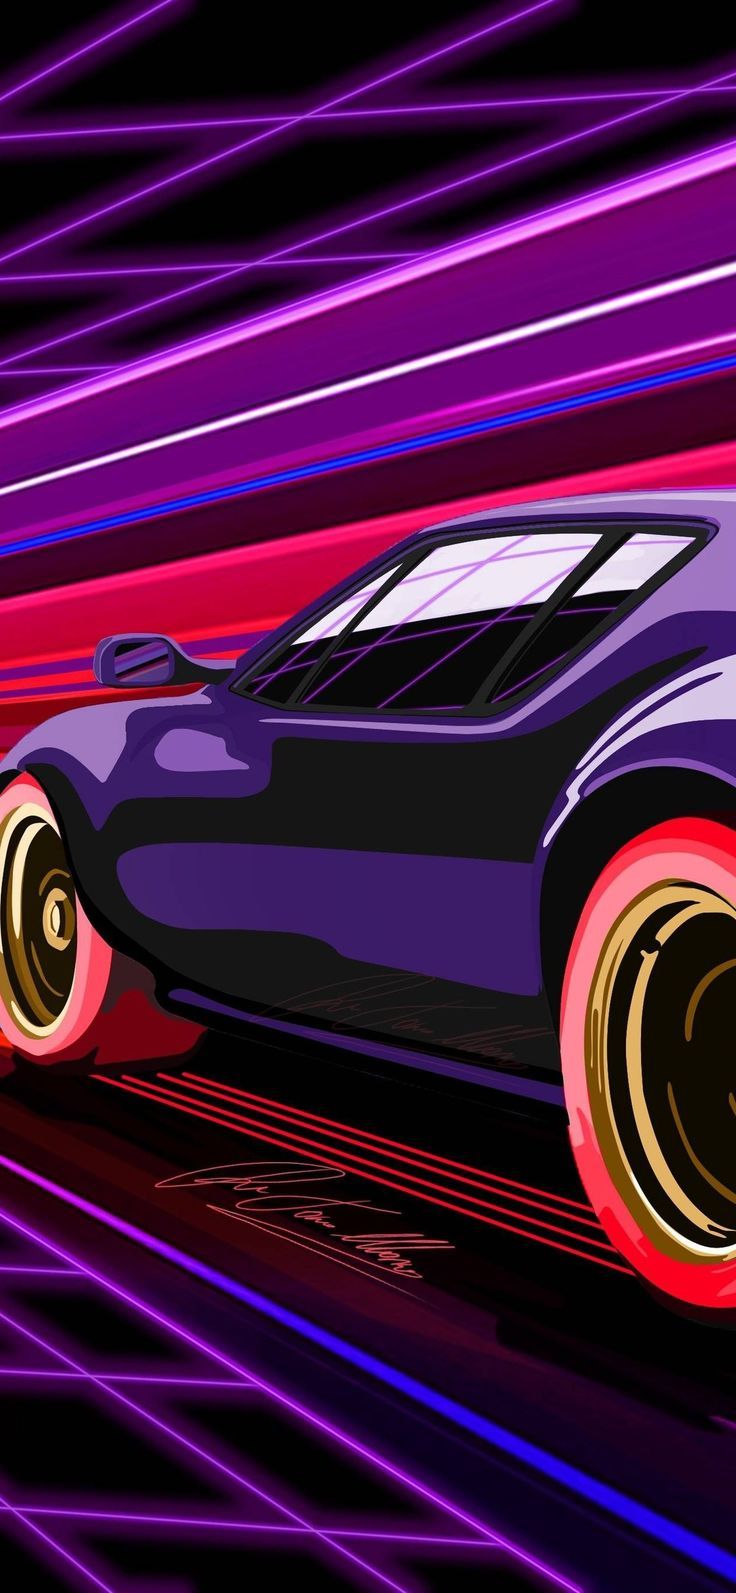 iPhone XS wallpaper, Retro Racing Muscle Car iPhone X